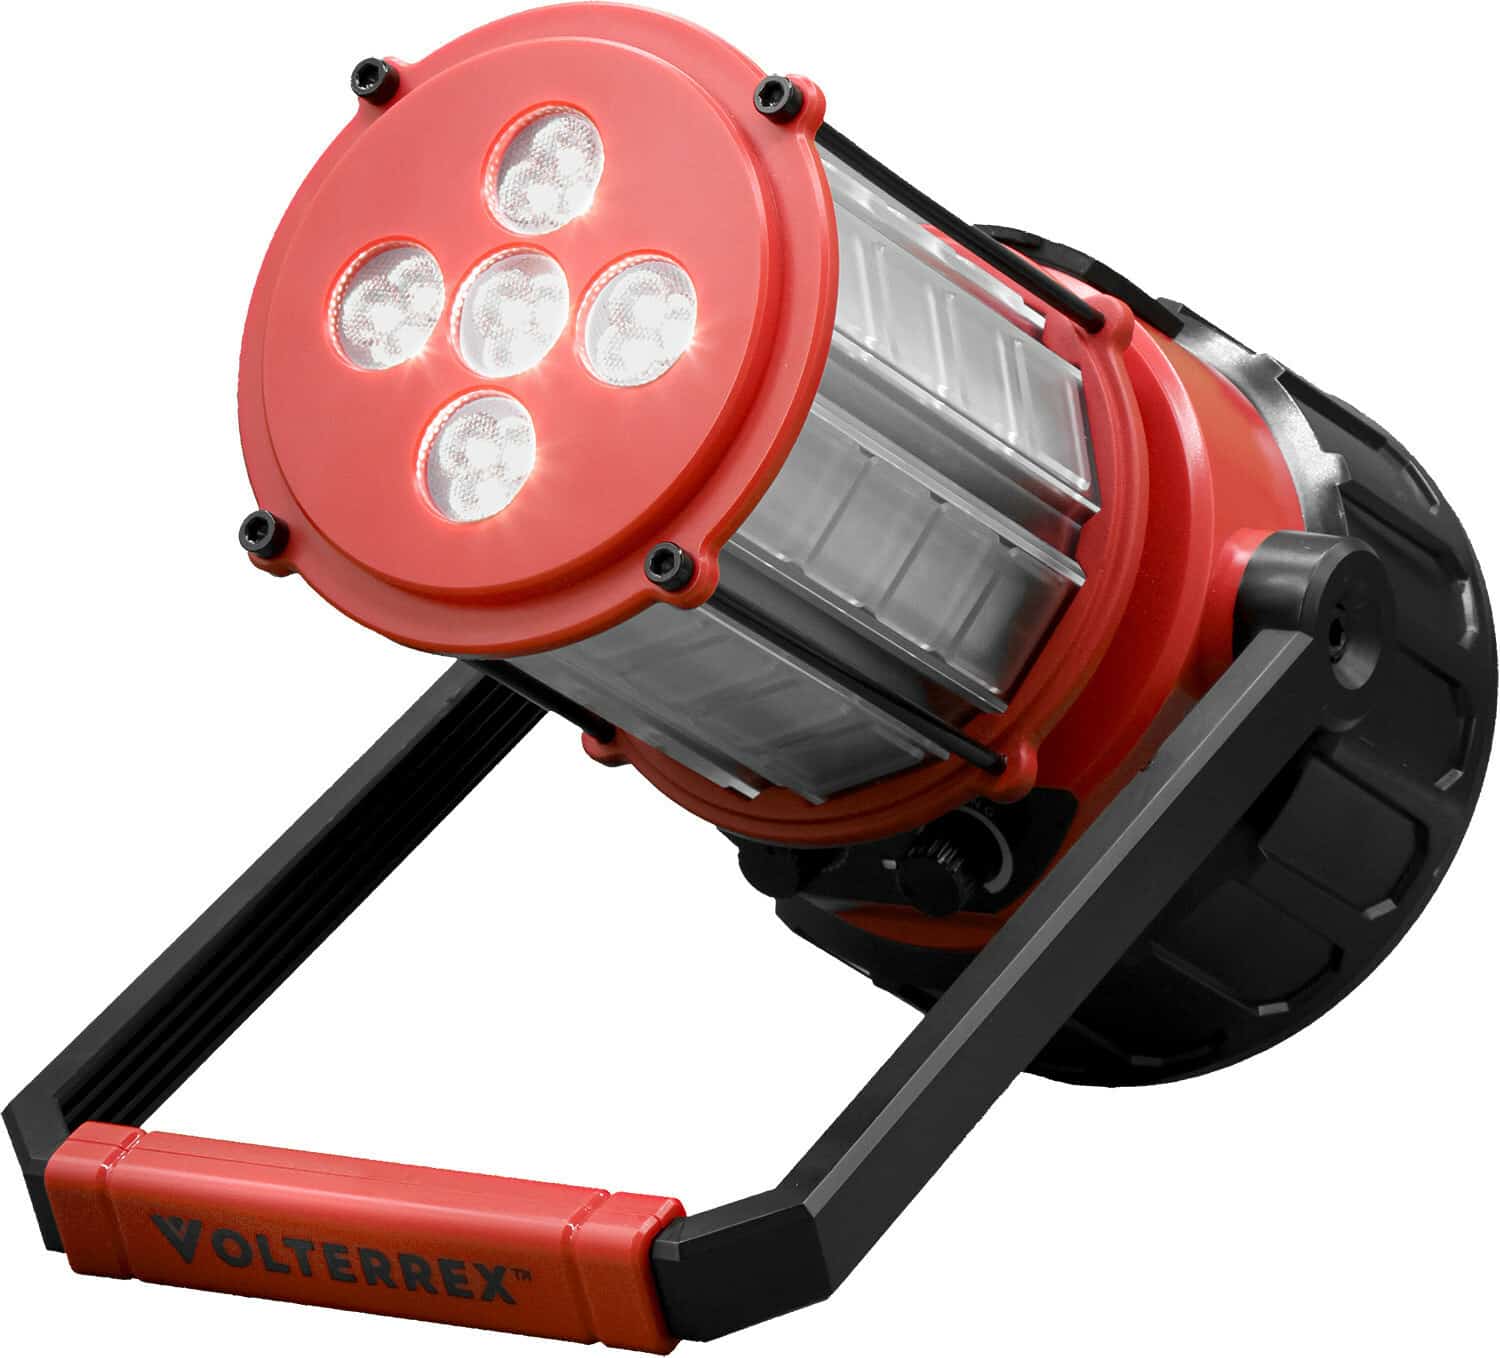 Volterrex LED Pro Lantern: 4000 lumens, USB charging, and 4 lighting modes